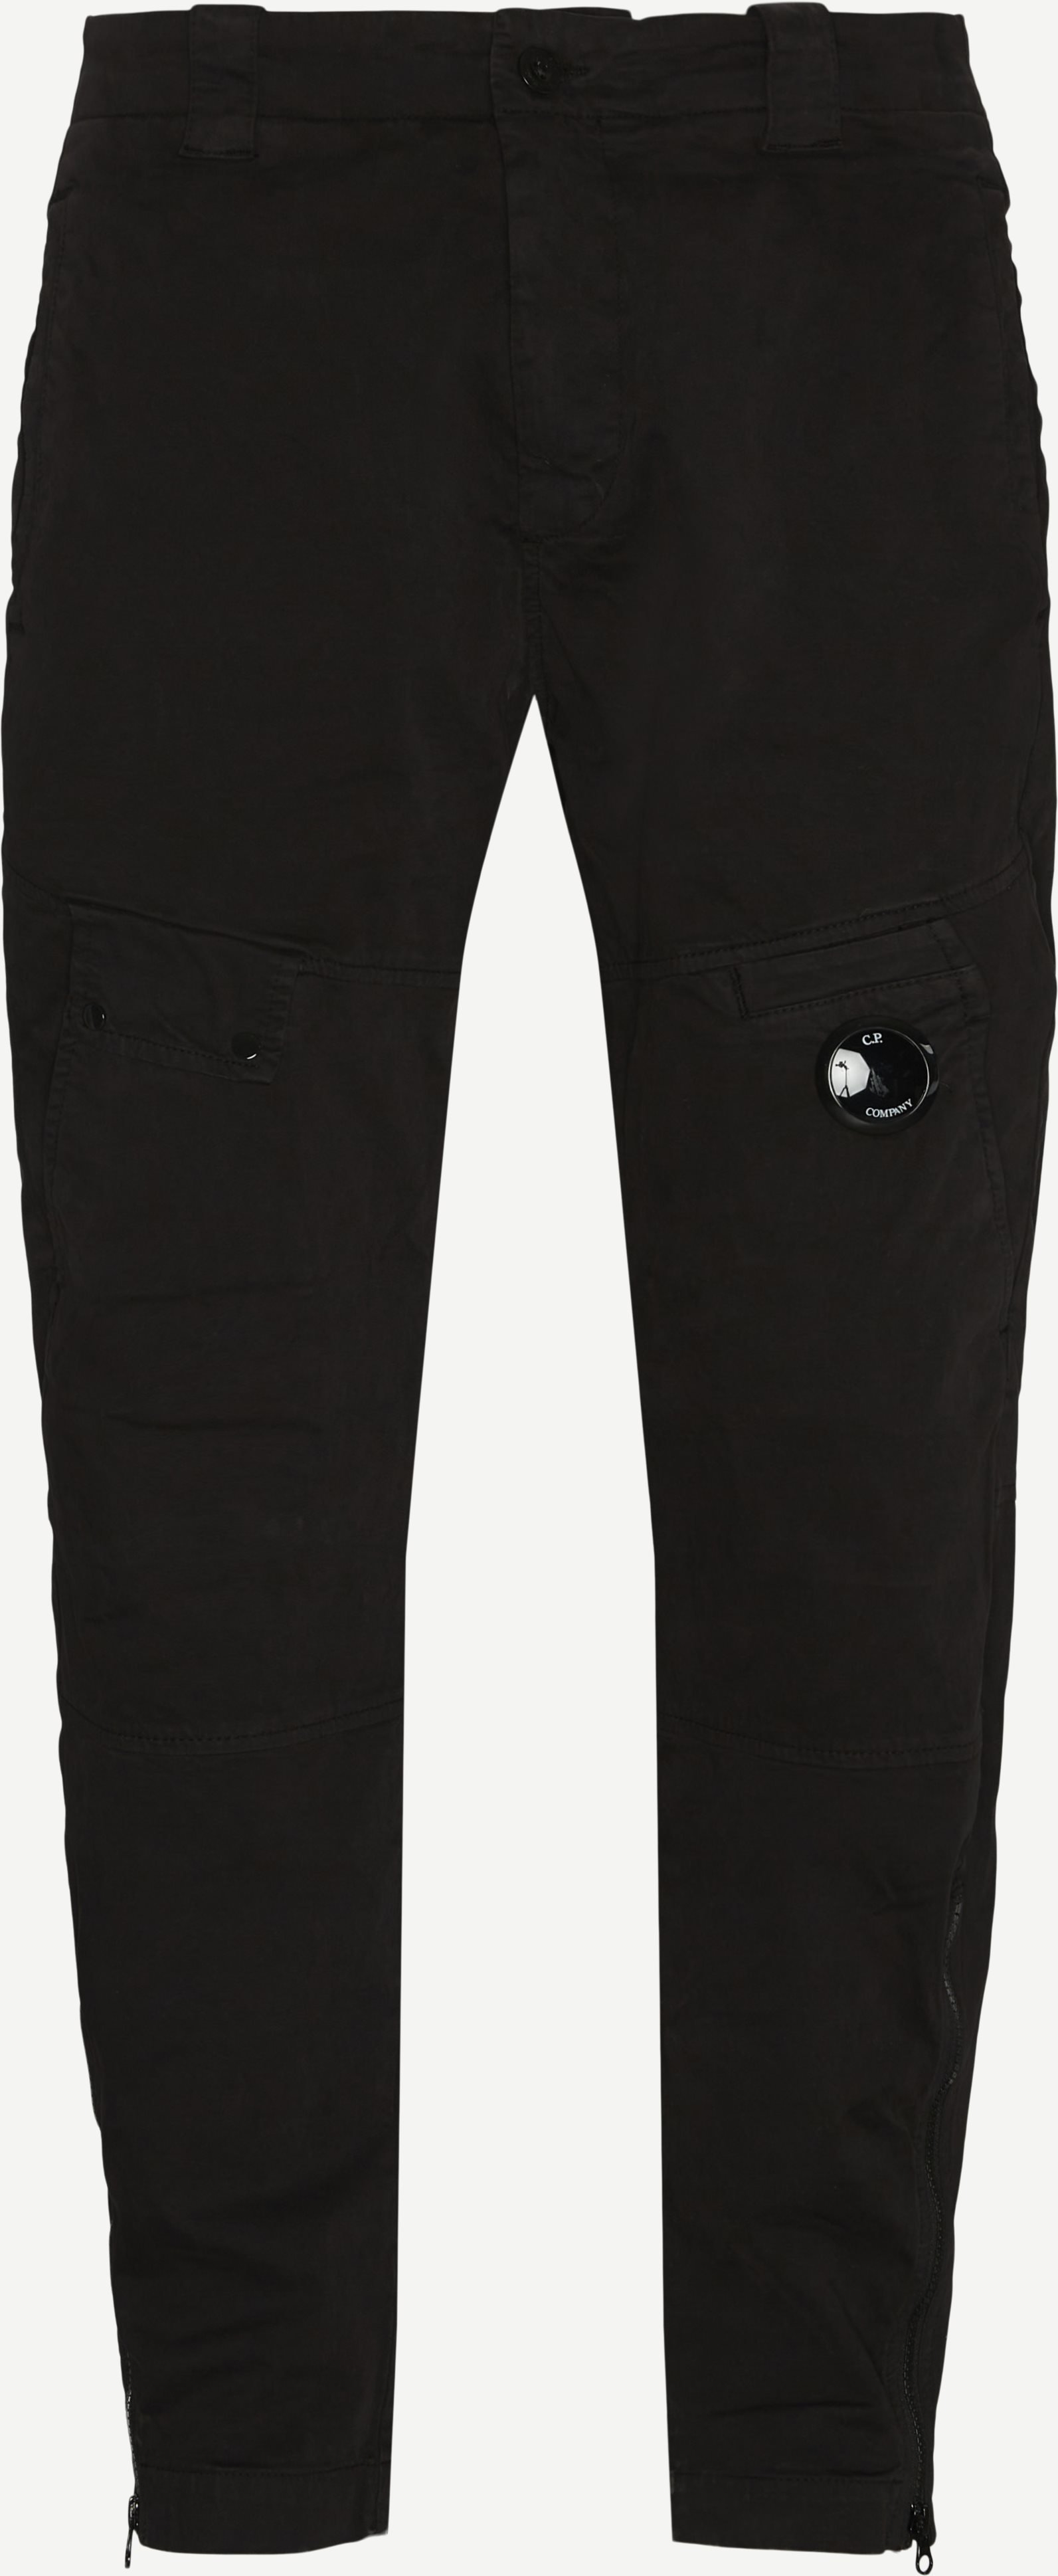 Garment Dyed Pants - Trousers - Regular fit - Black